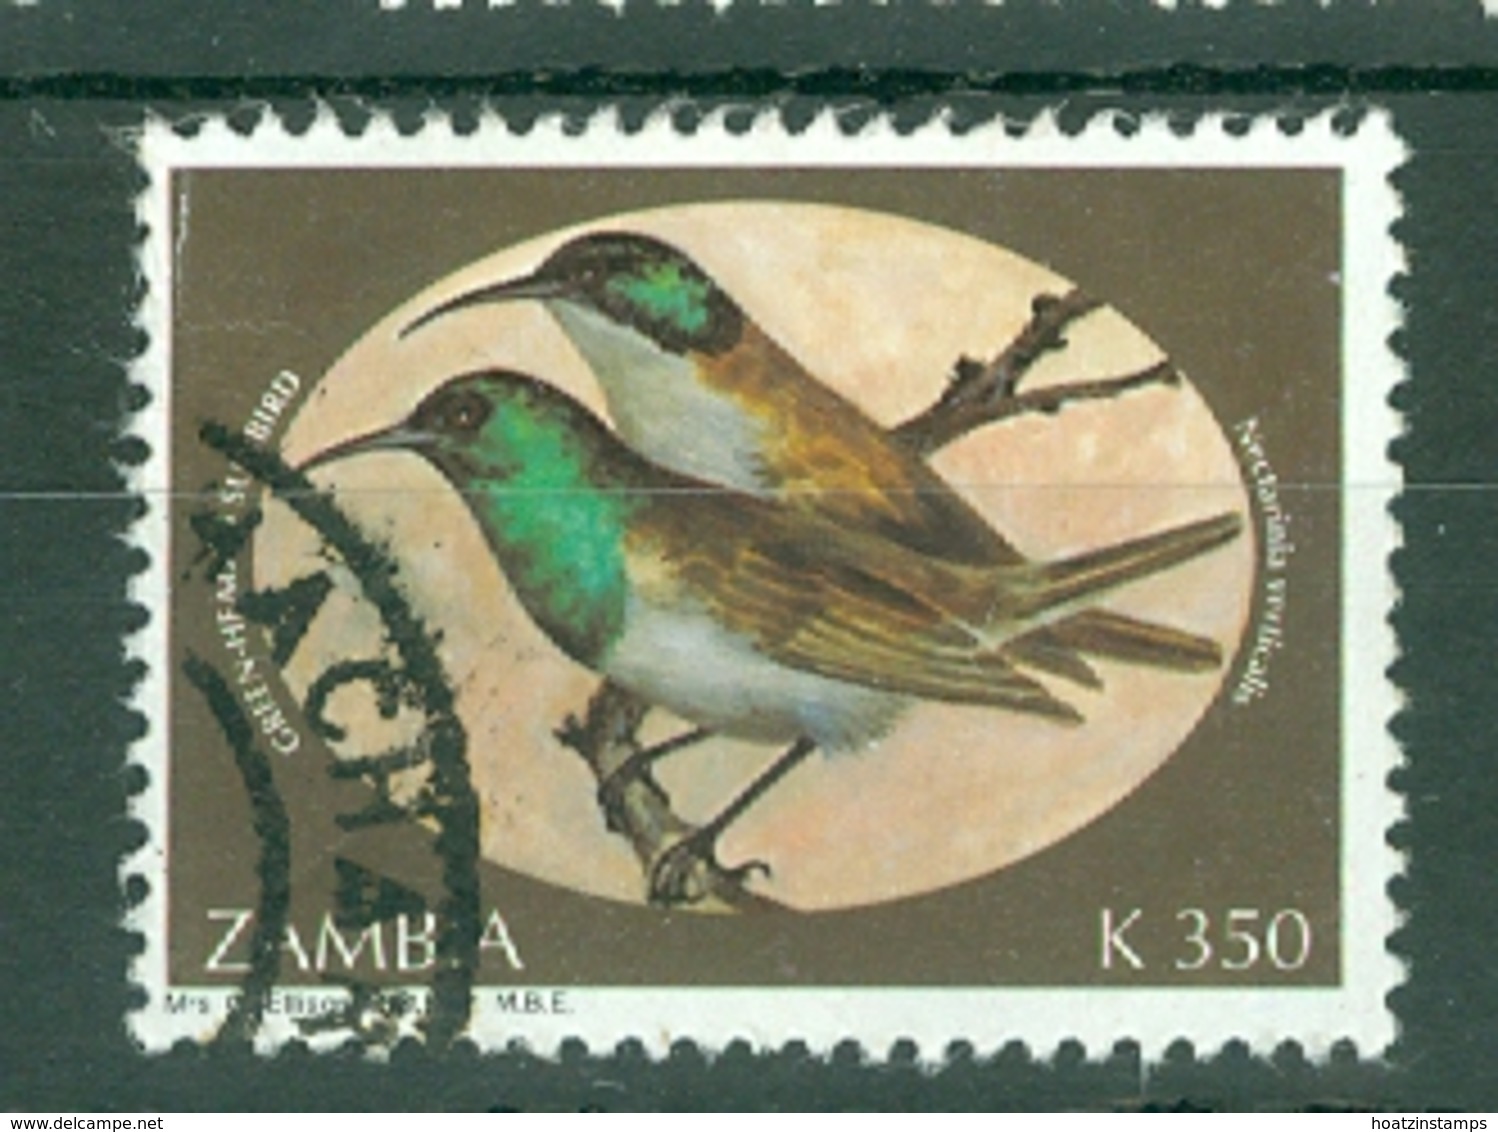 Zambia: 1994   Sunbirds    SG730   K350     Used - Zambia (1965-...)